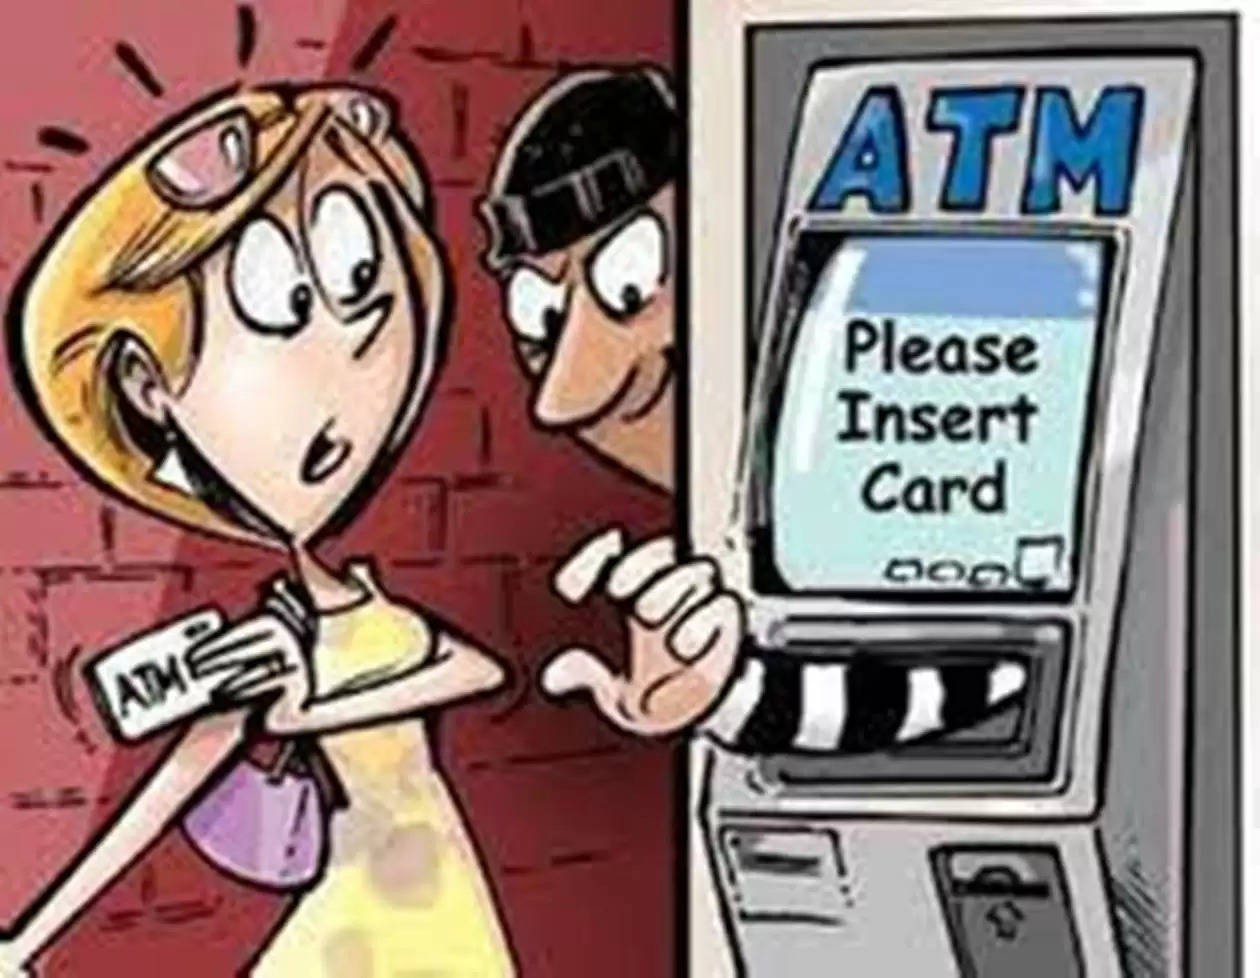 ATM Skimming